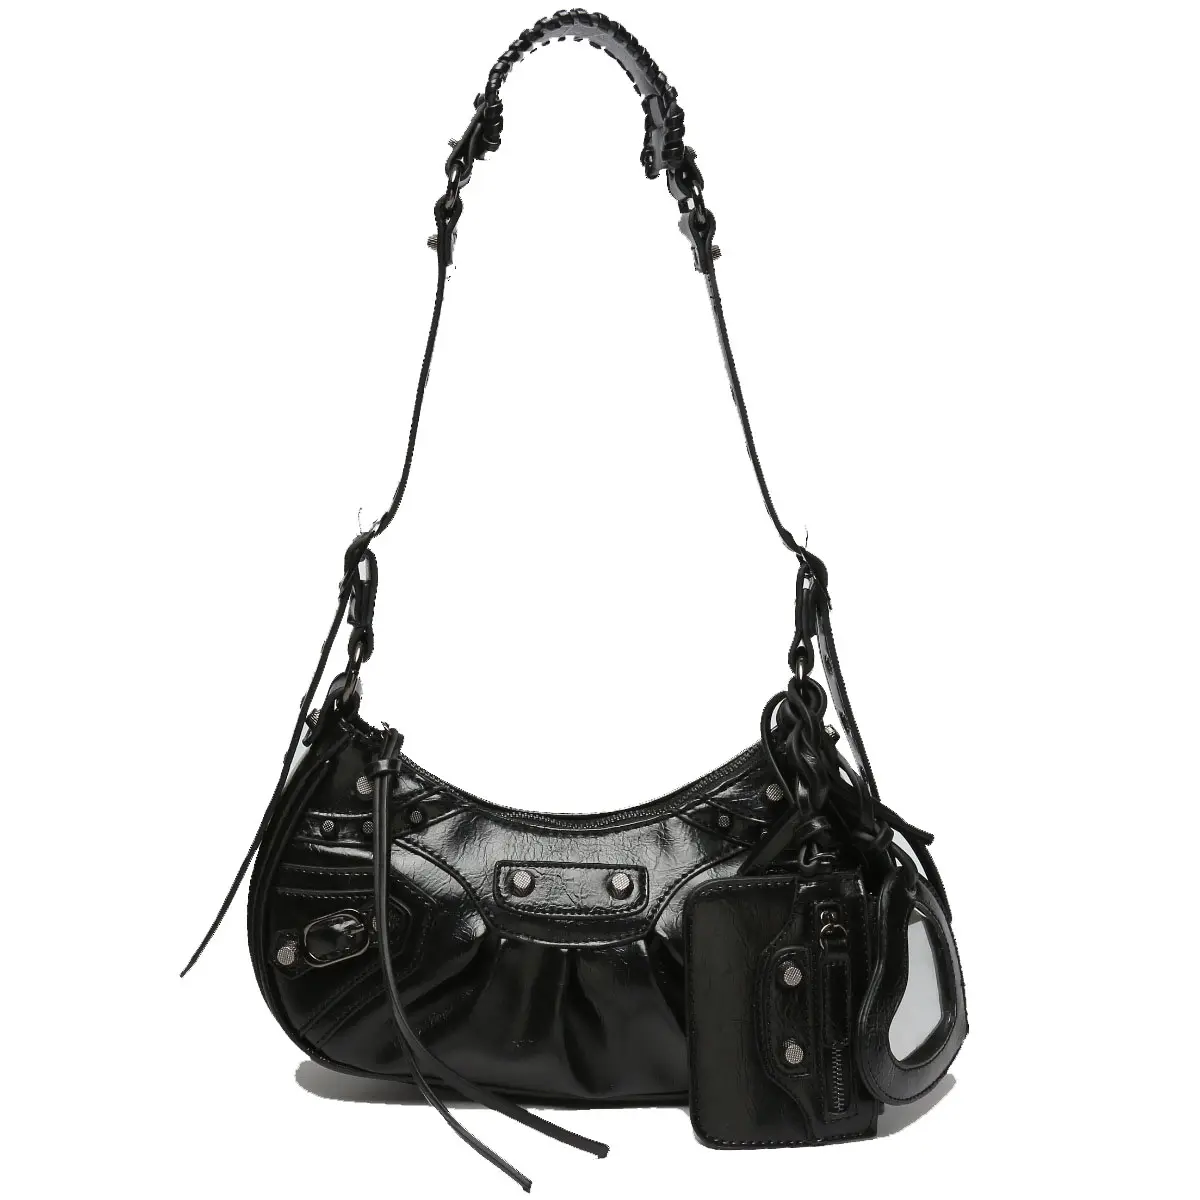 Ladies Purse Satchel Shoulder Bags Tote, Fashion PU Leather Rock Rivets Bag Hobo Handbags For Women